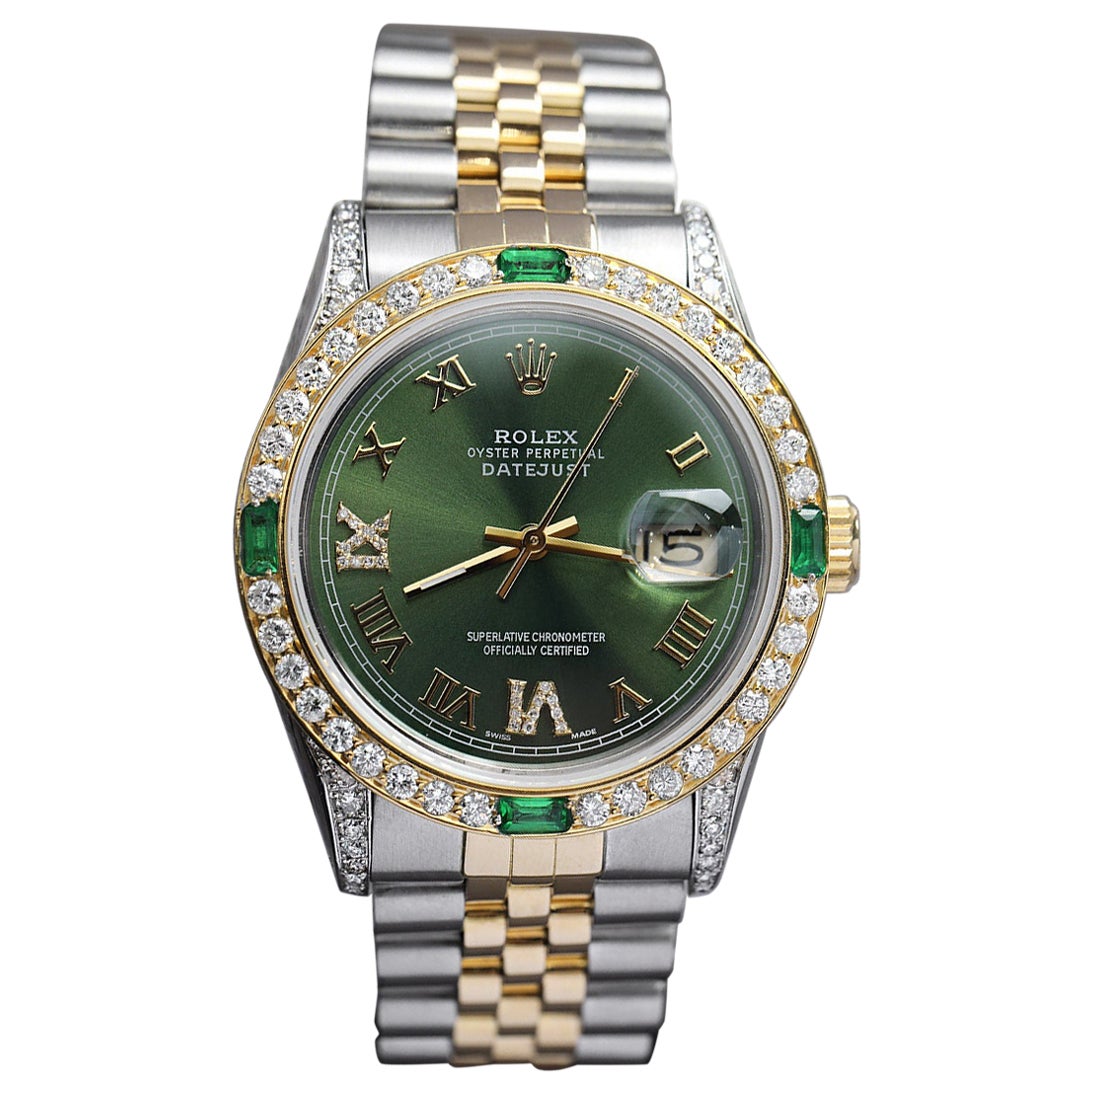 Rolex Datejust Green Dial, Diamonds / Emeralds Bezel Two Tone Watch 16013 For Sale